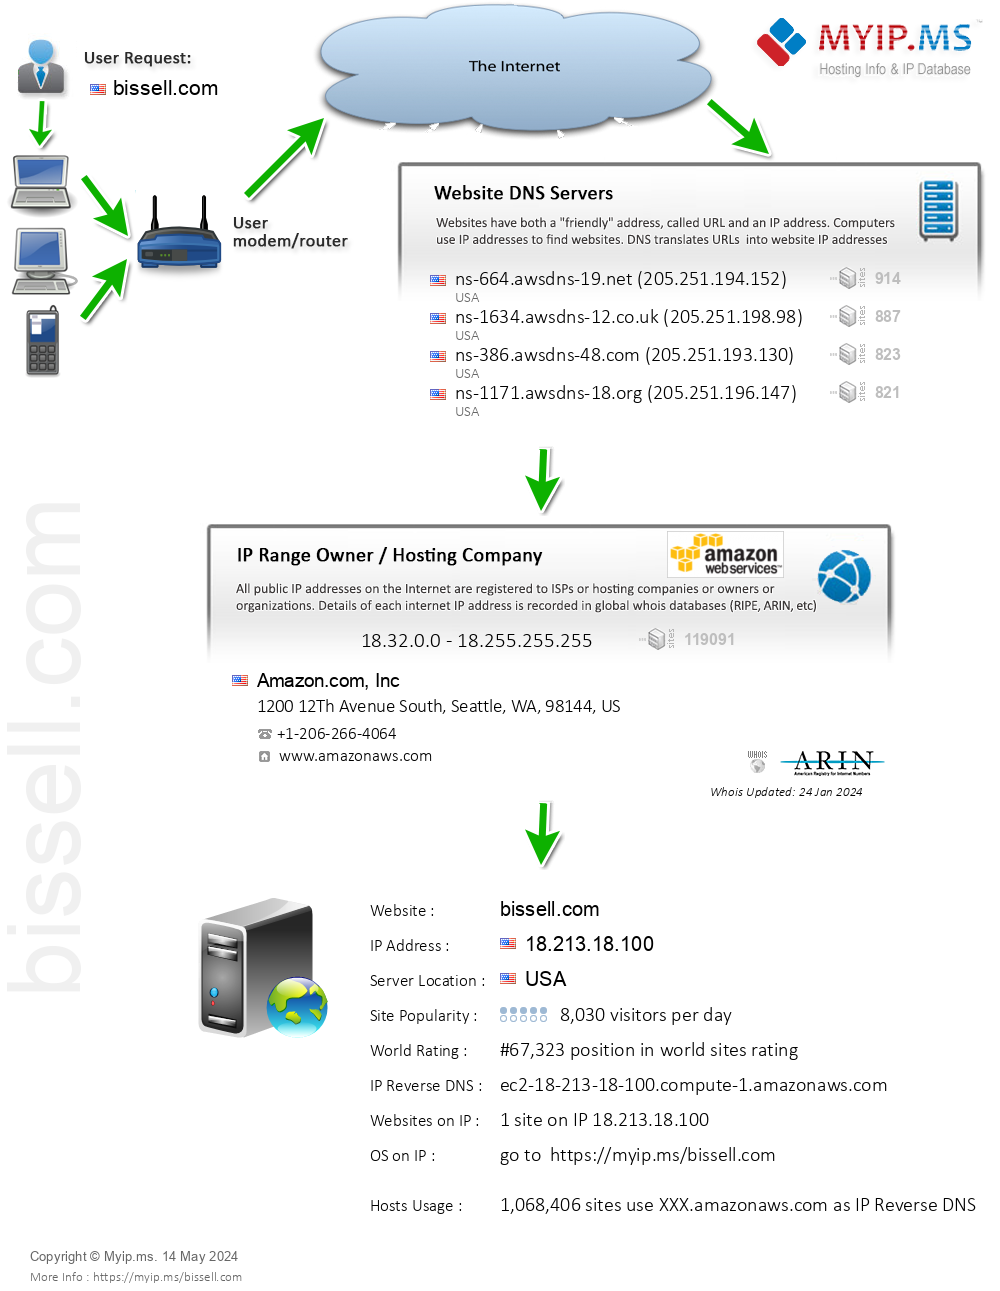 Bissell.com - Website Hosting Visual IP Diagram